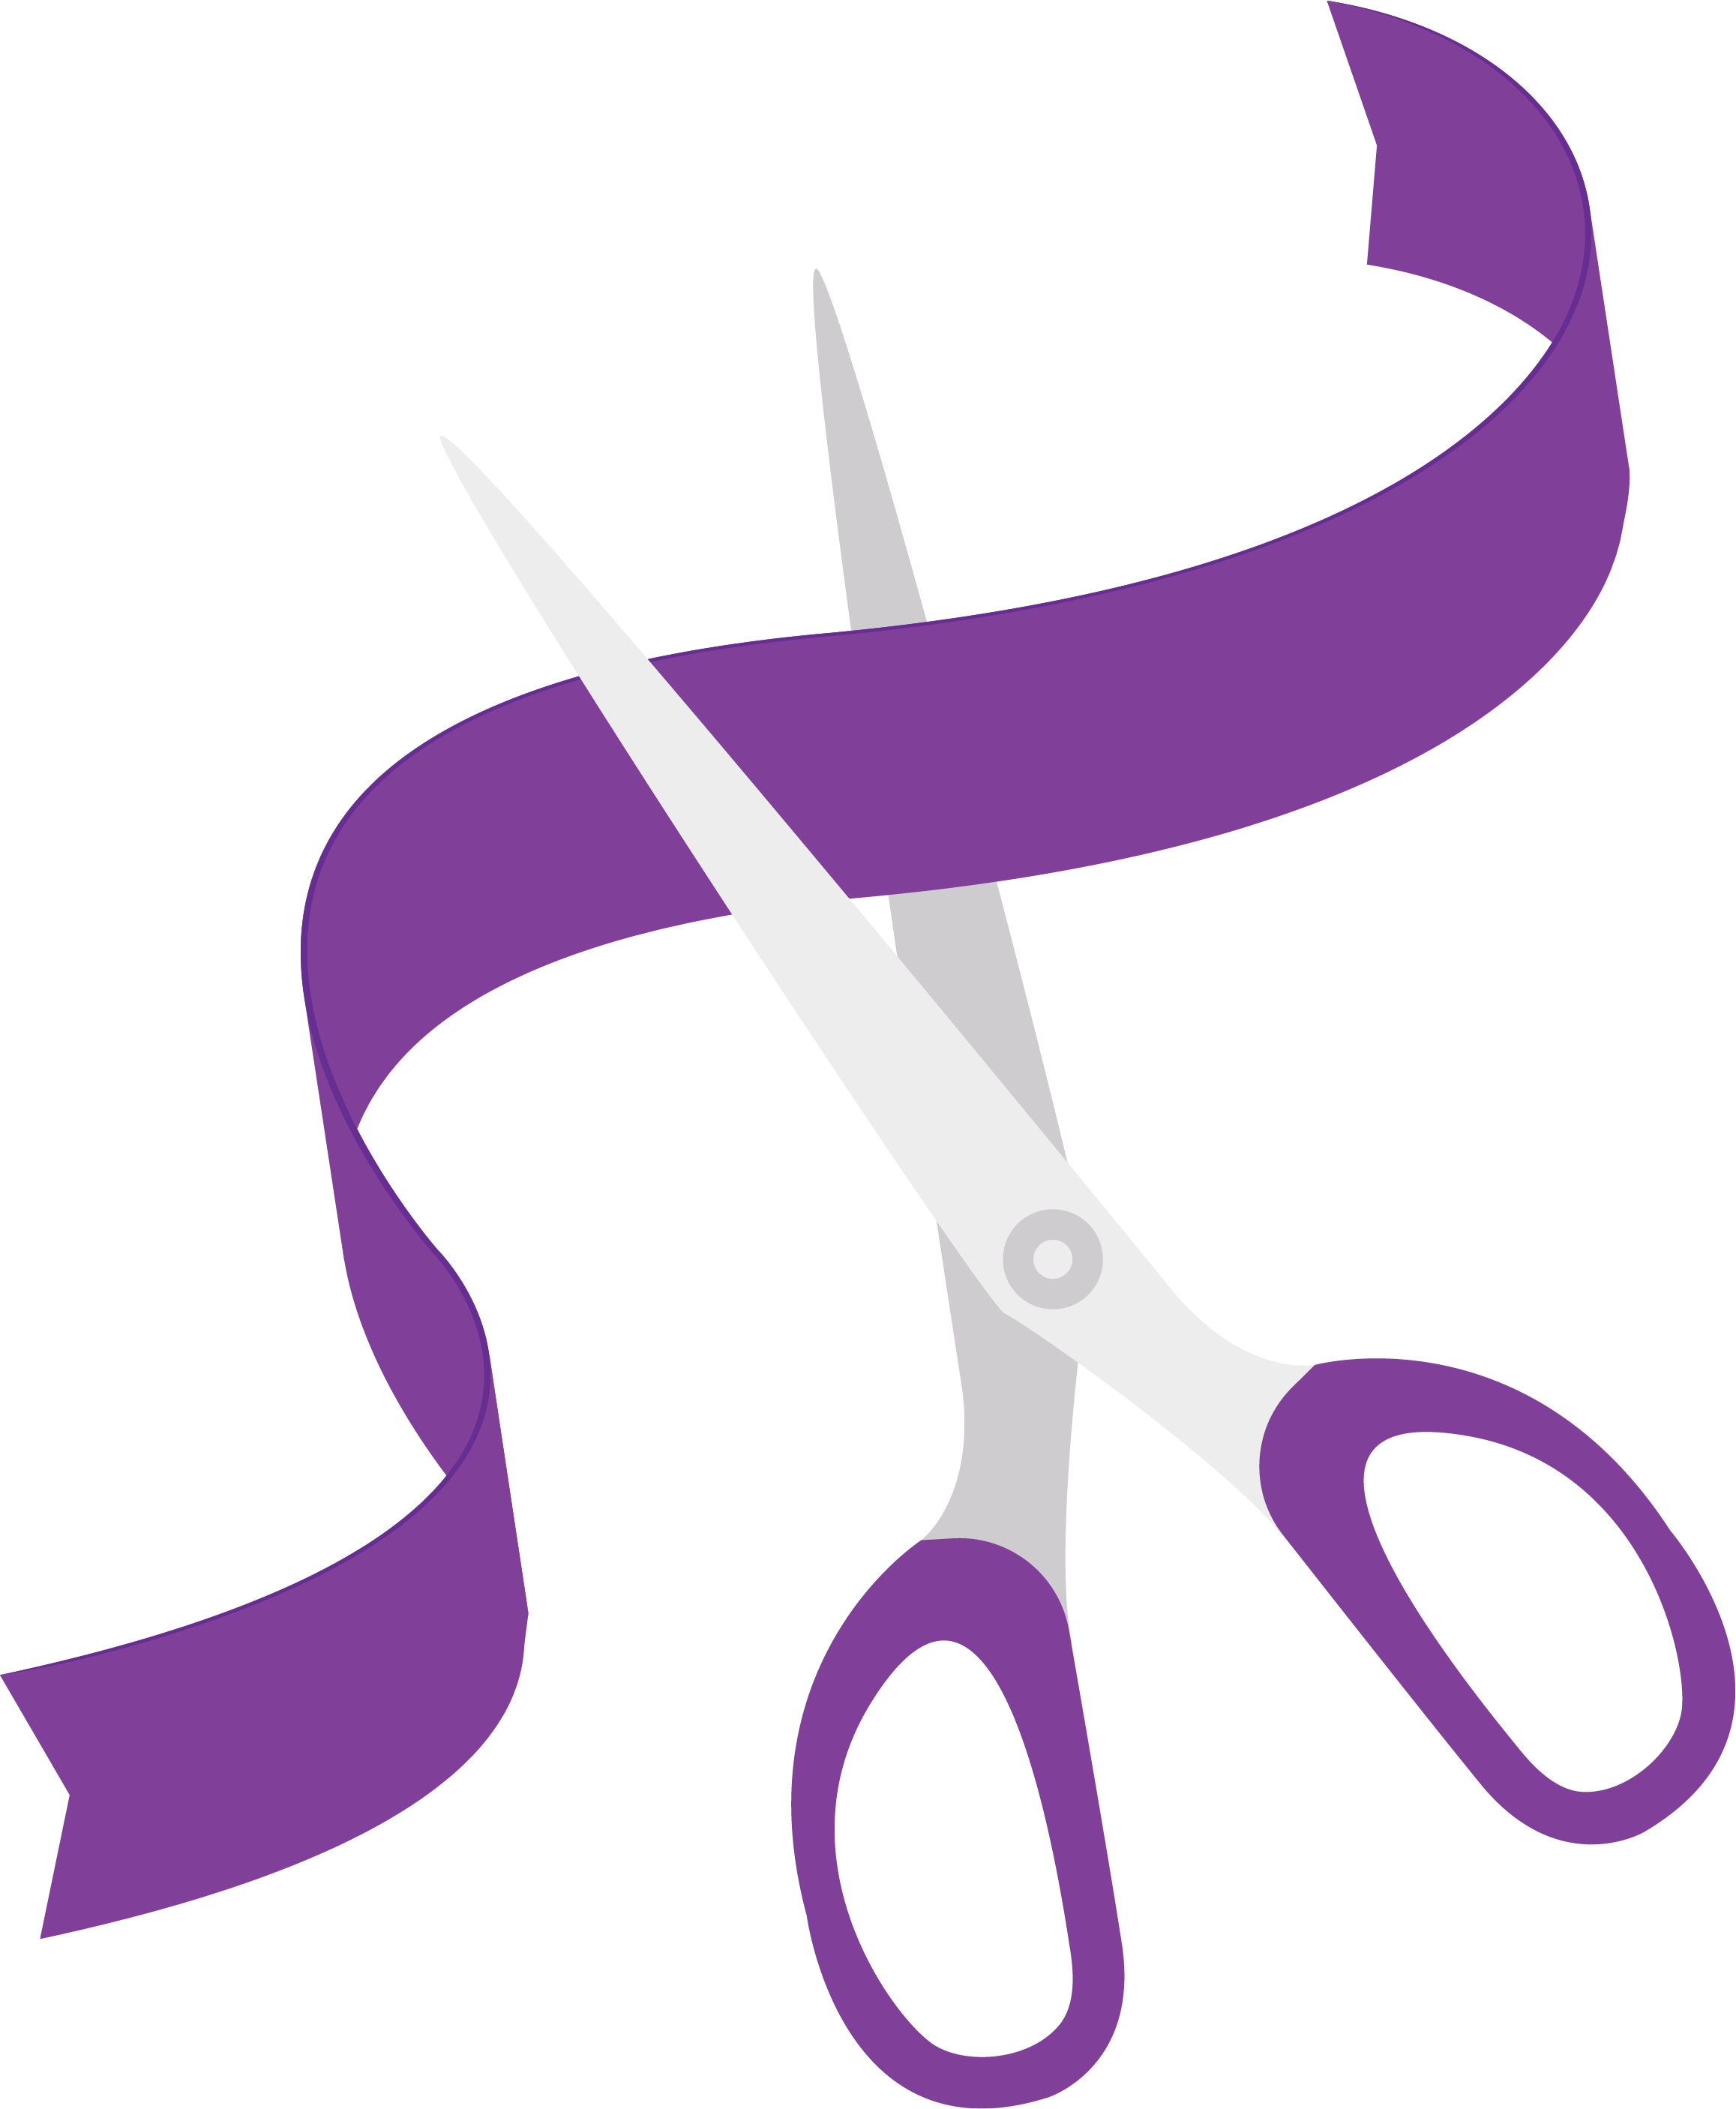 Ribbon and Scissors